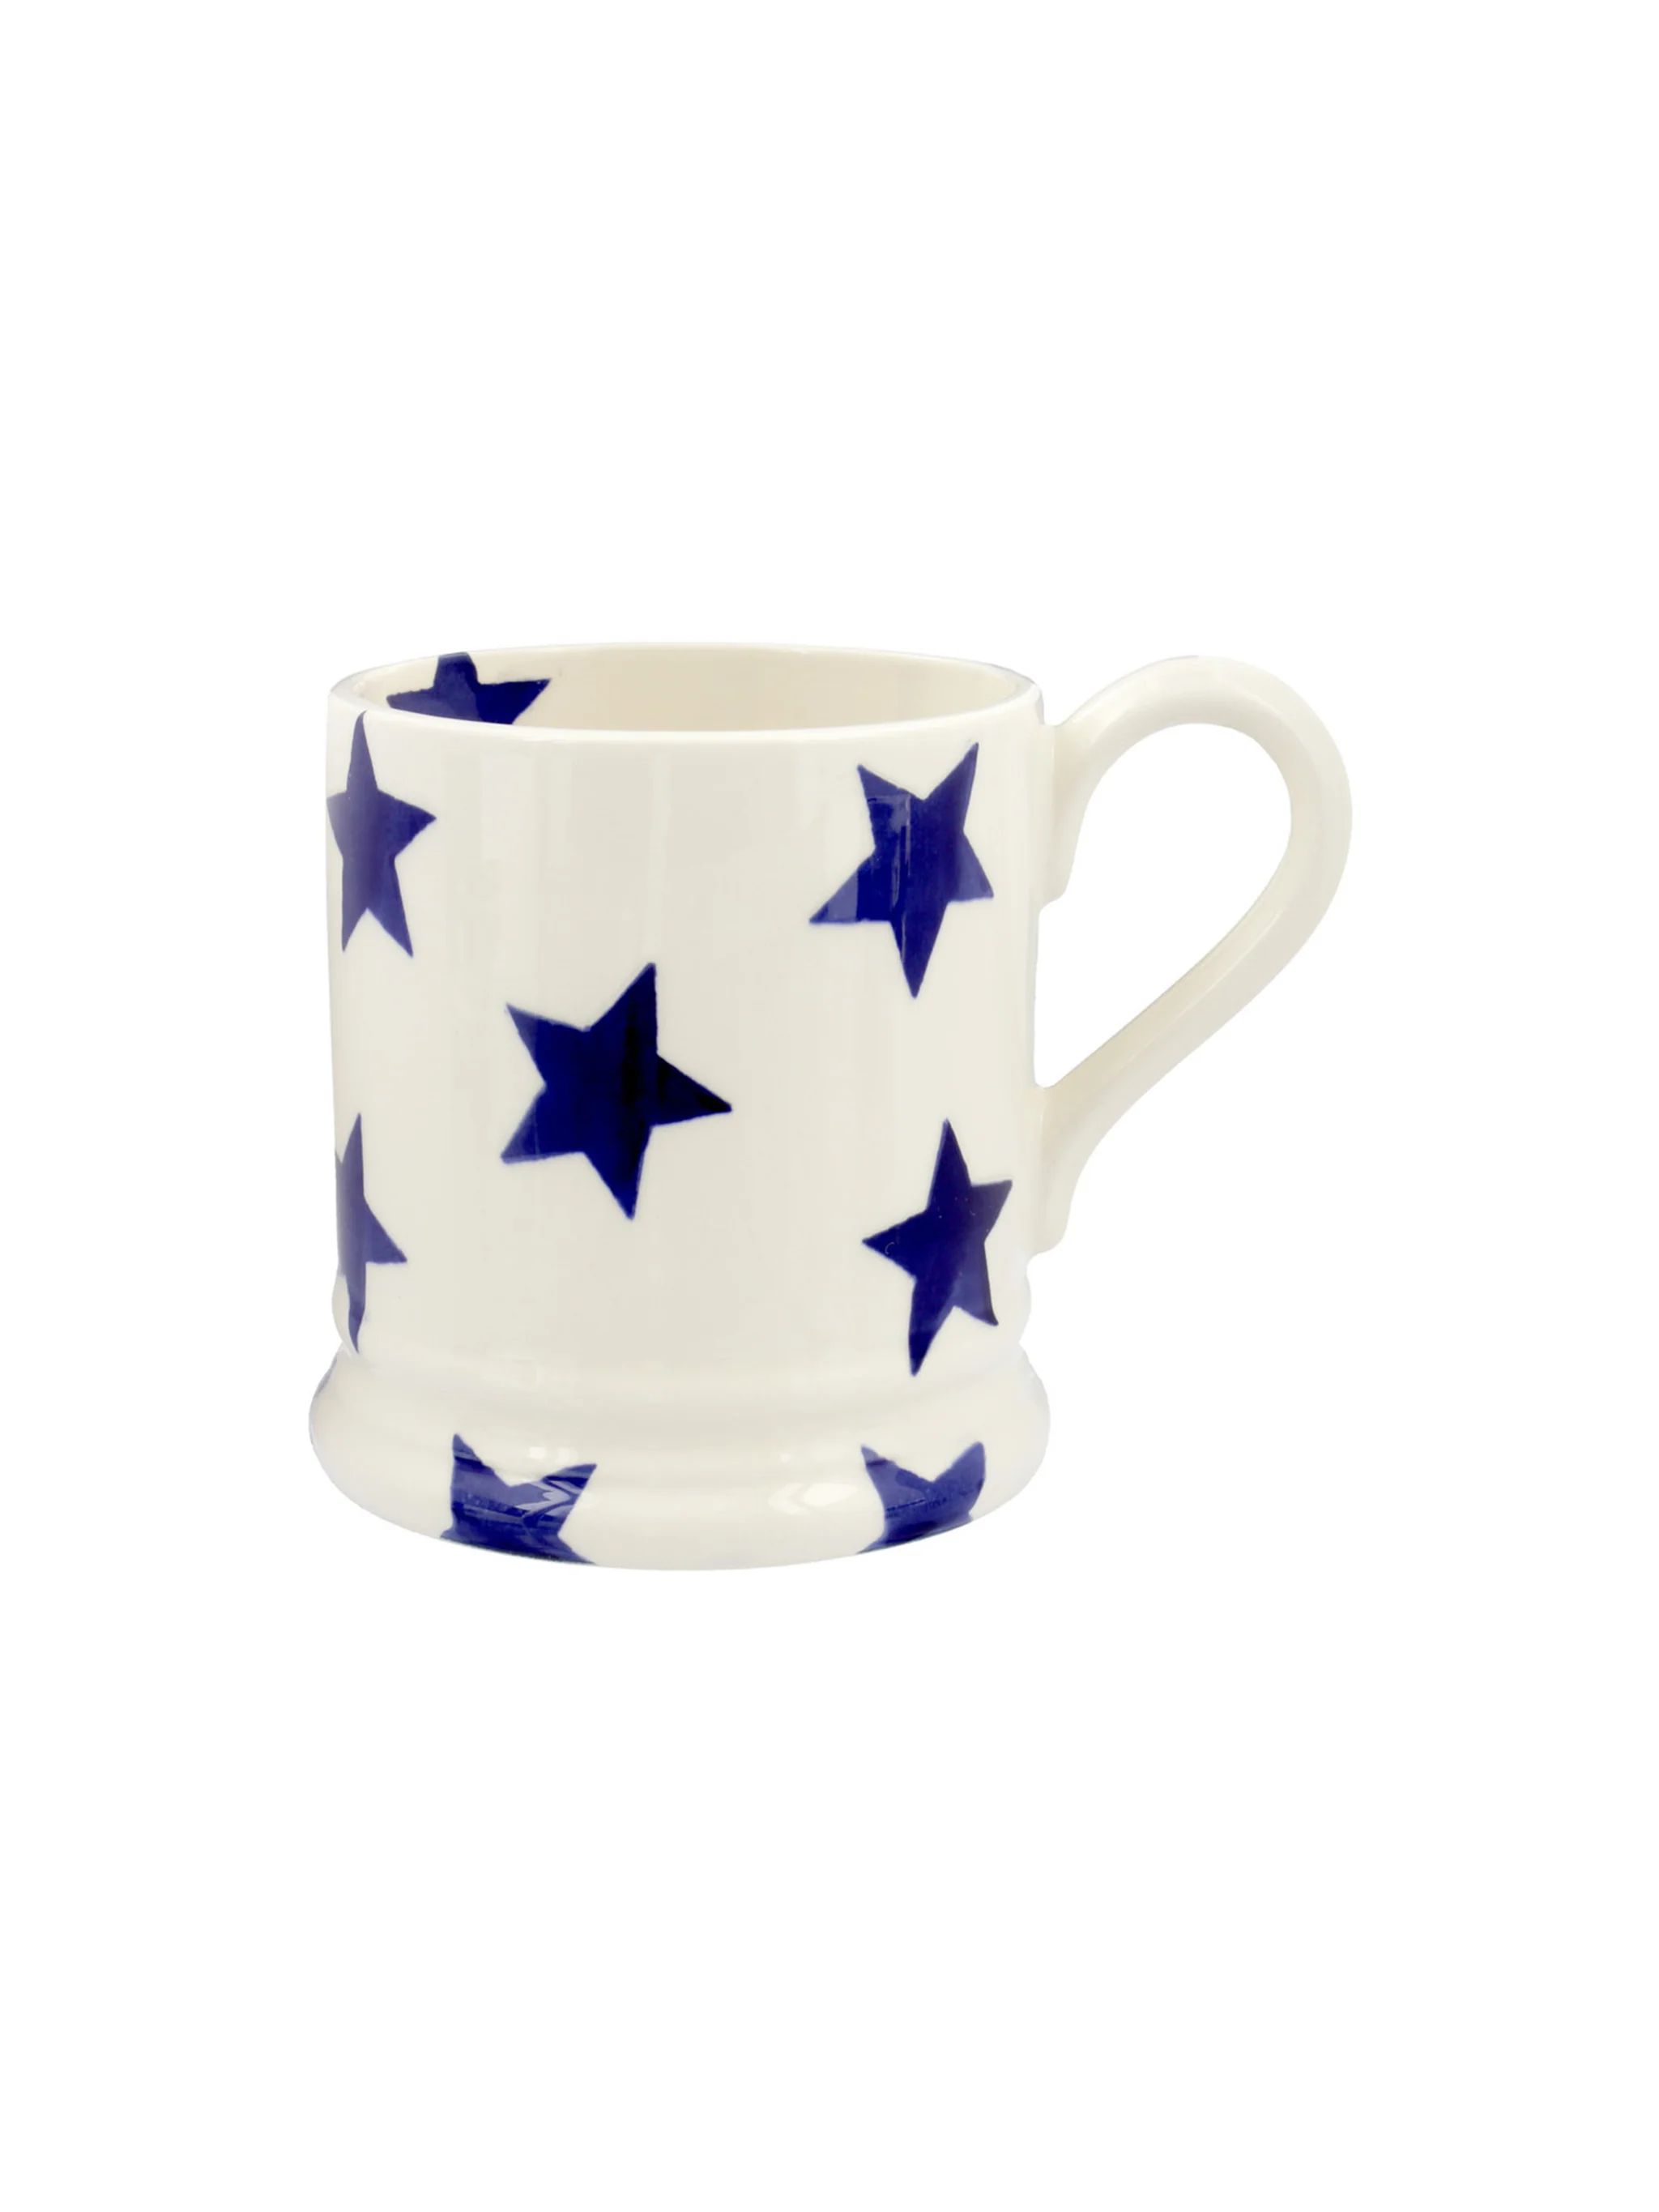 Emma Bridgewater Blue Star Half Pint Mug | Weston Table